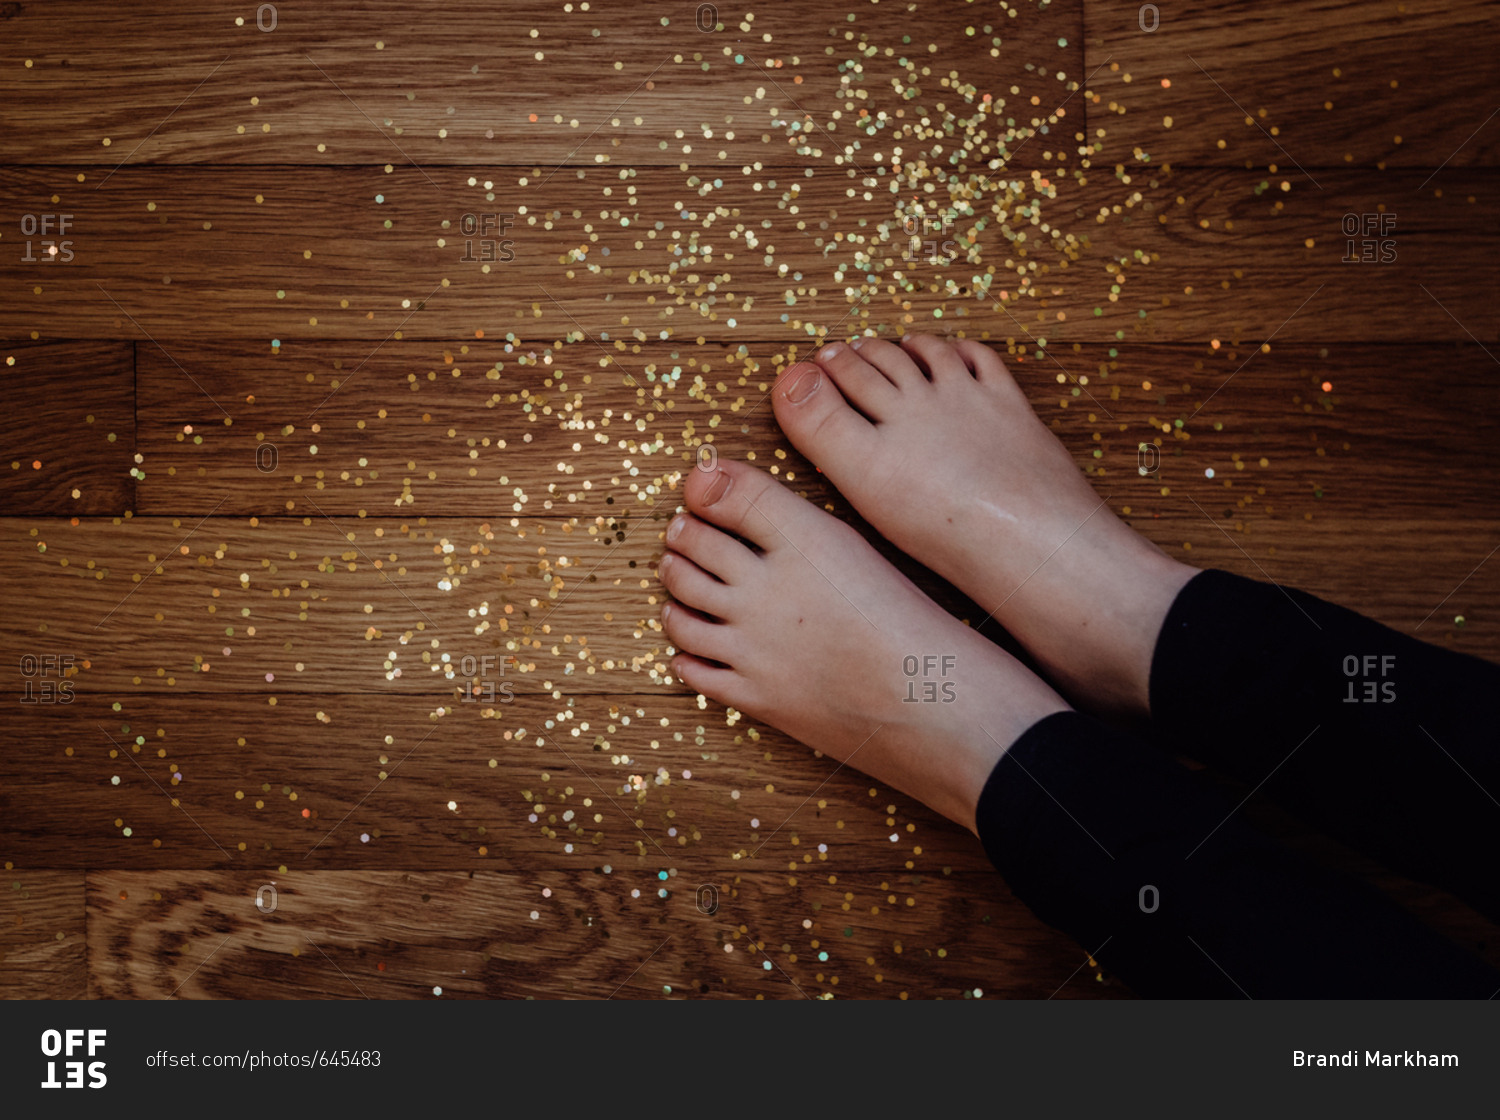 Little feet in spilled glitter